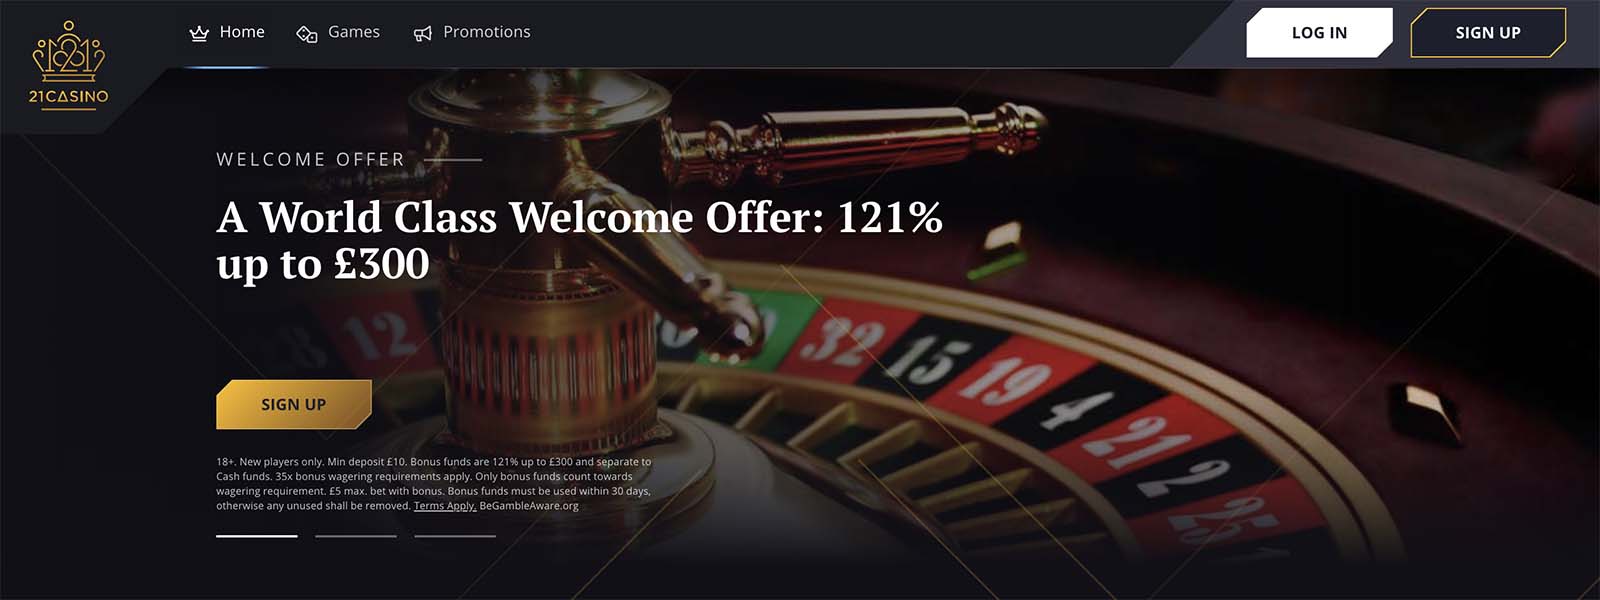 $1 minimum deposit online casino usa